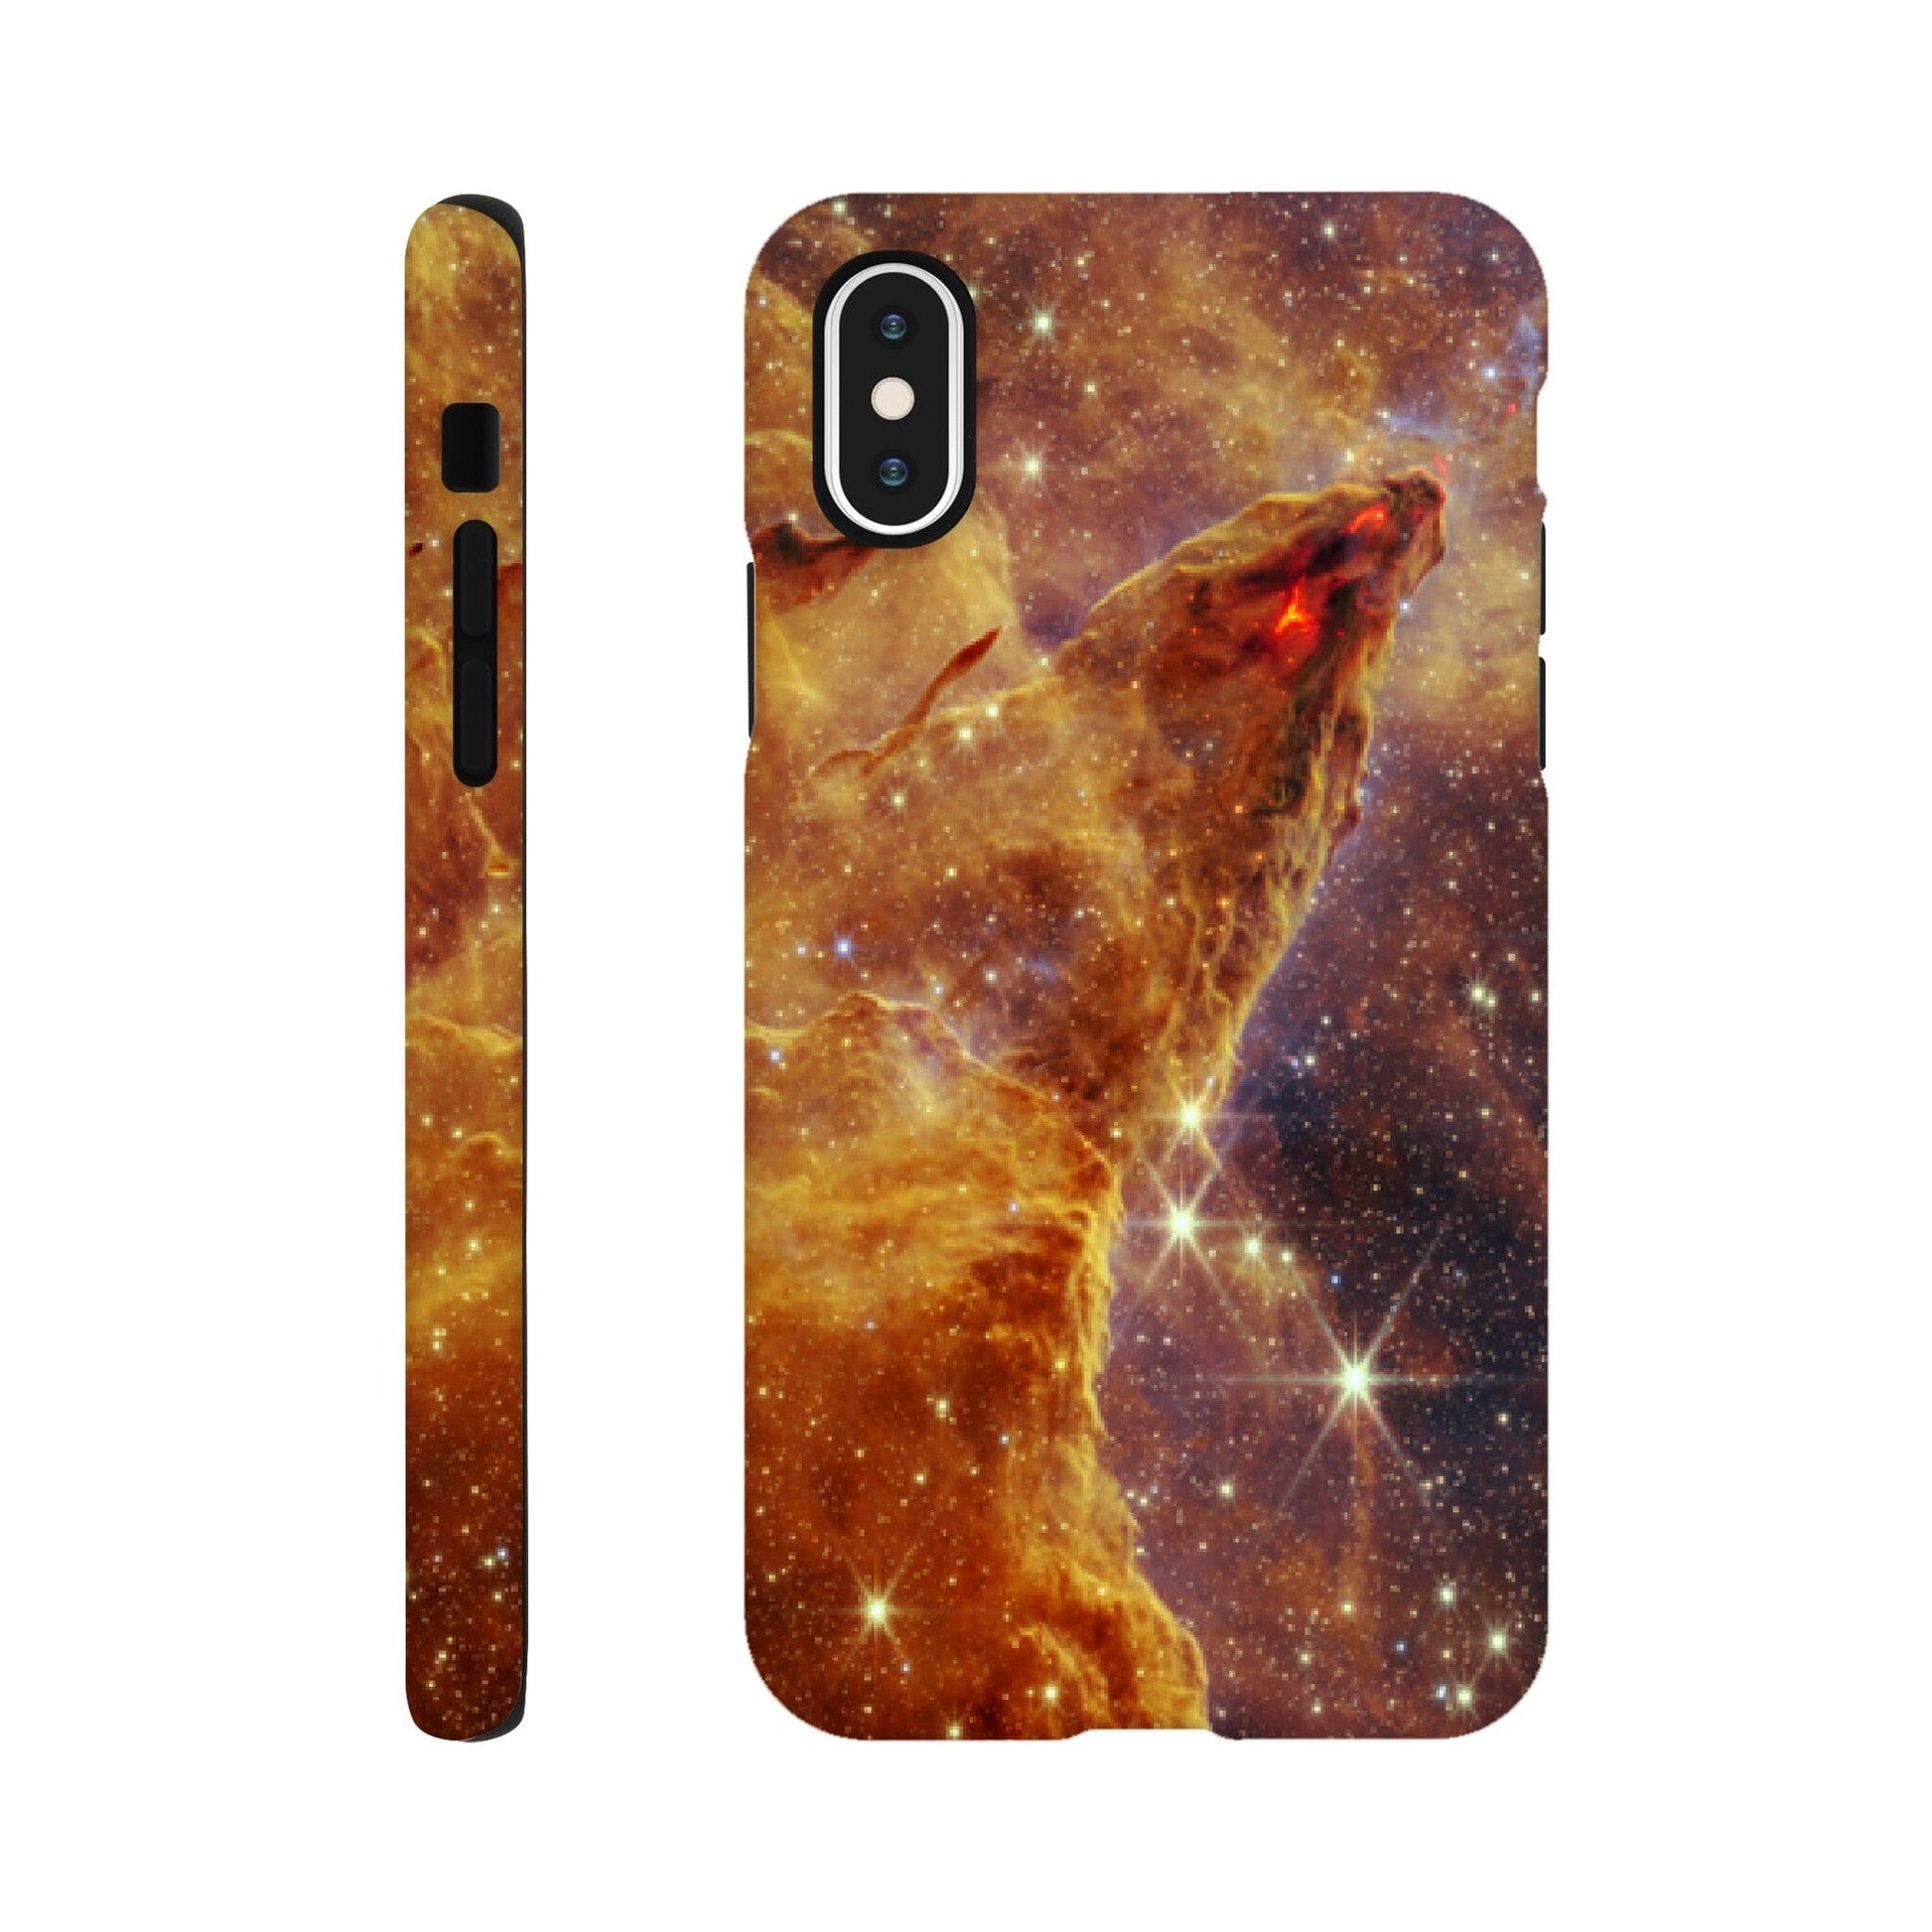 NASA - Phone Case Tough - 9. Pillars of Creation (NIRCam Image) - James Webb Space Telescope Phone Case TP Aviation Art iPhone X 